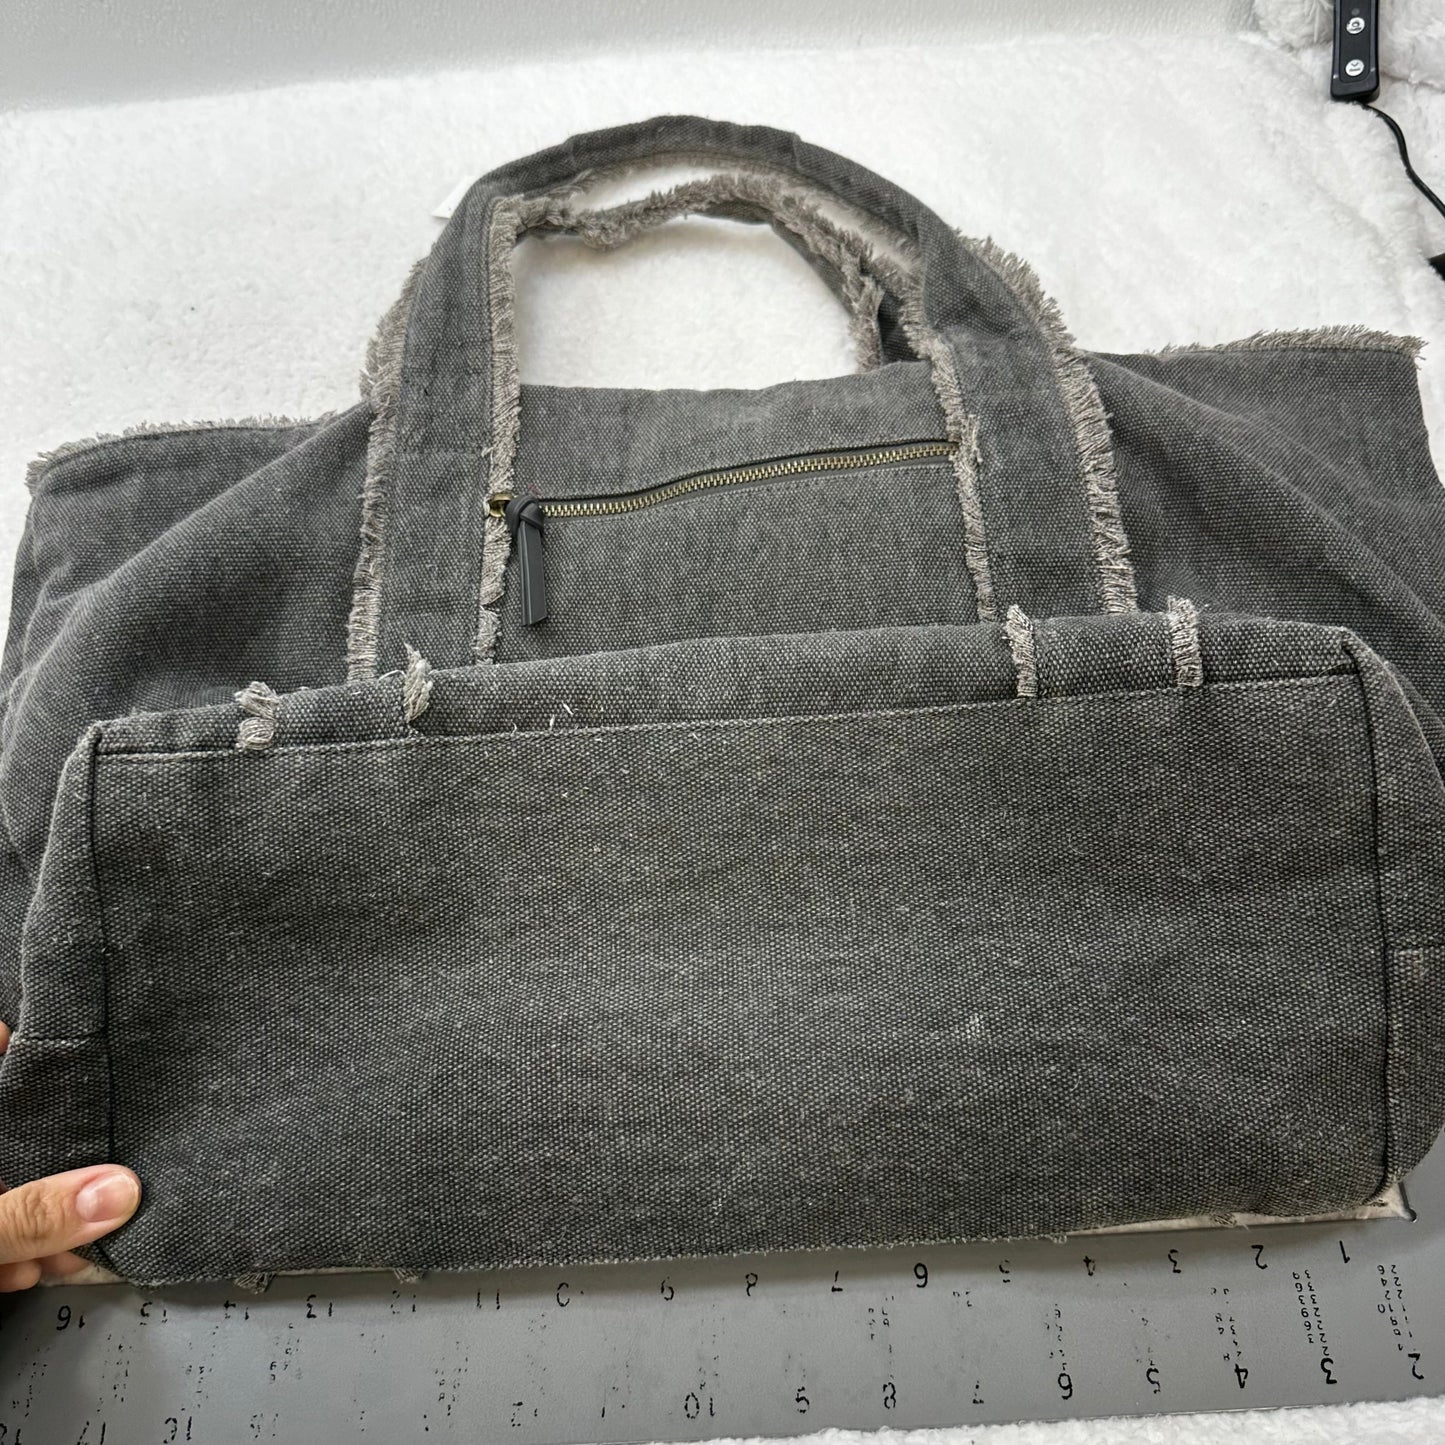 Handbag Steve Madden, Size large